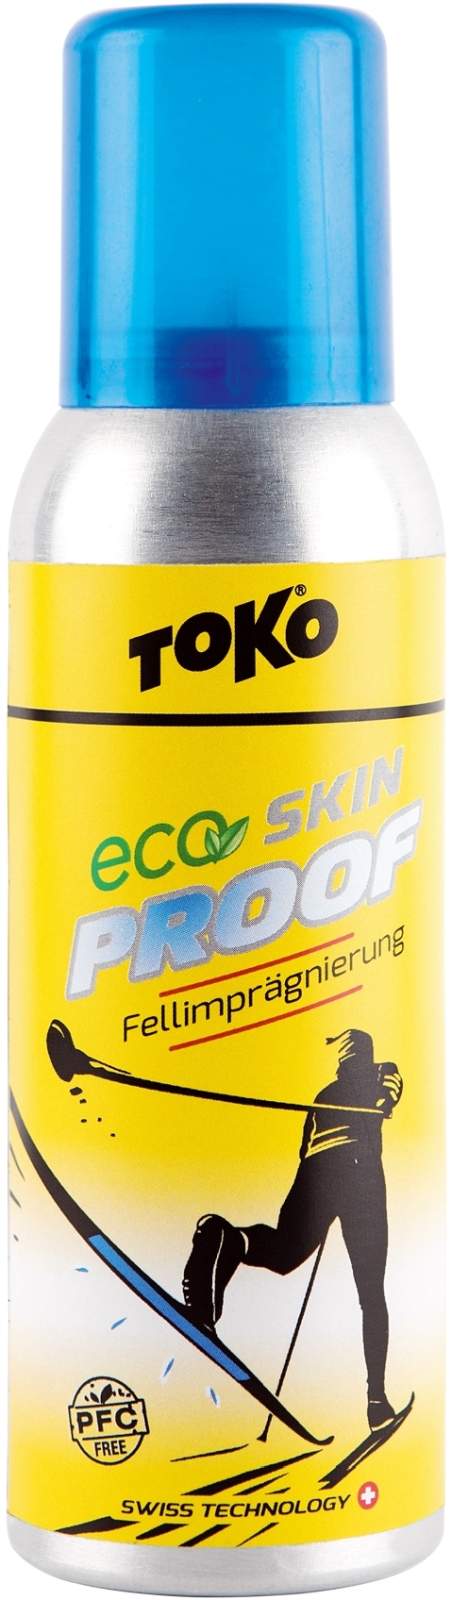 Toko Eco Skin Proof 100 ml